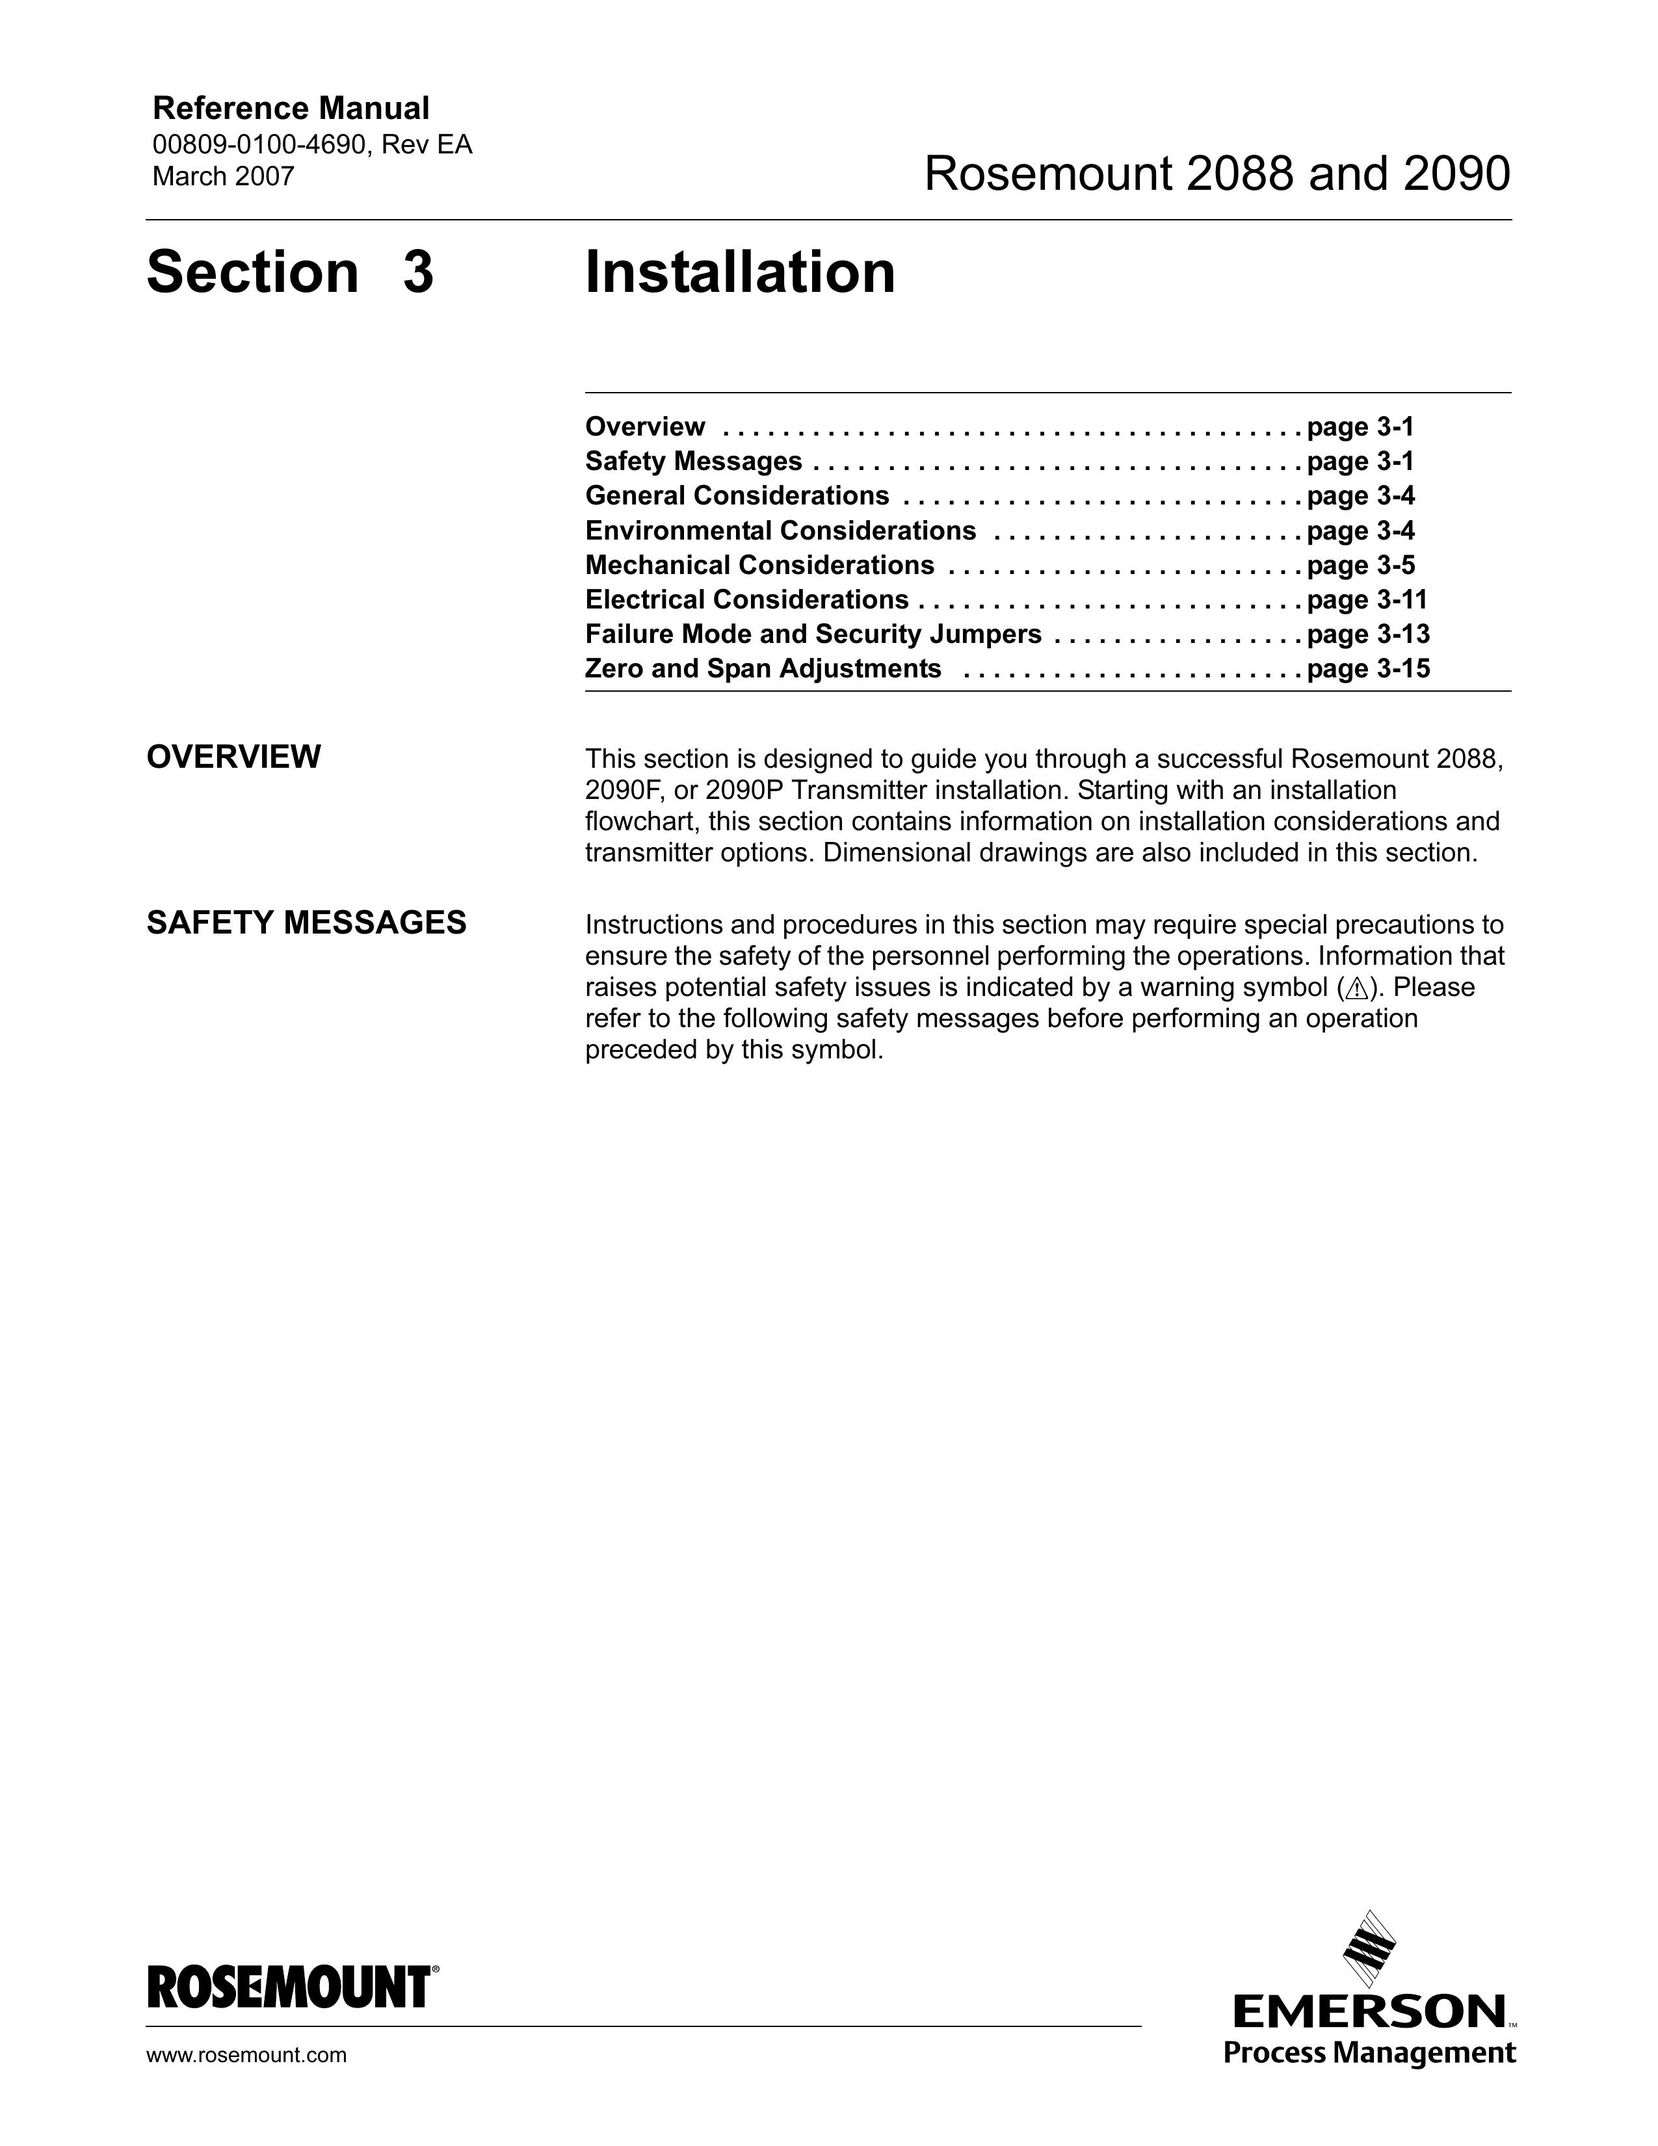 Emerson Process Management 2088 Satellite Radio User Manual